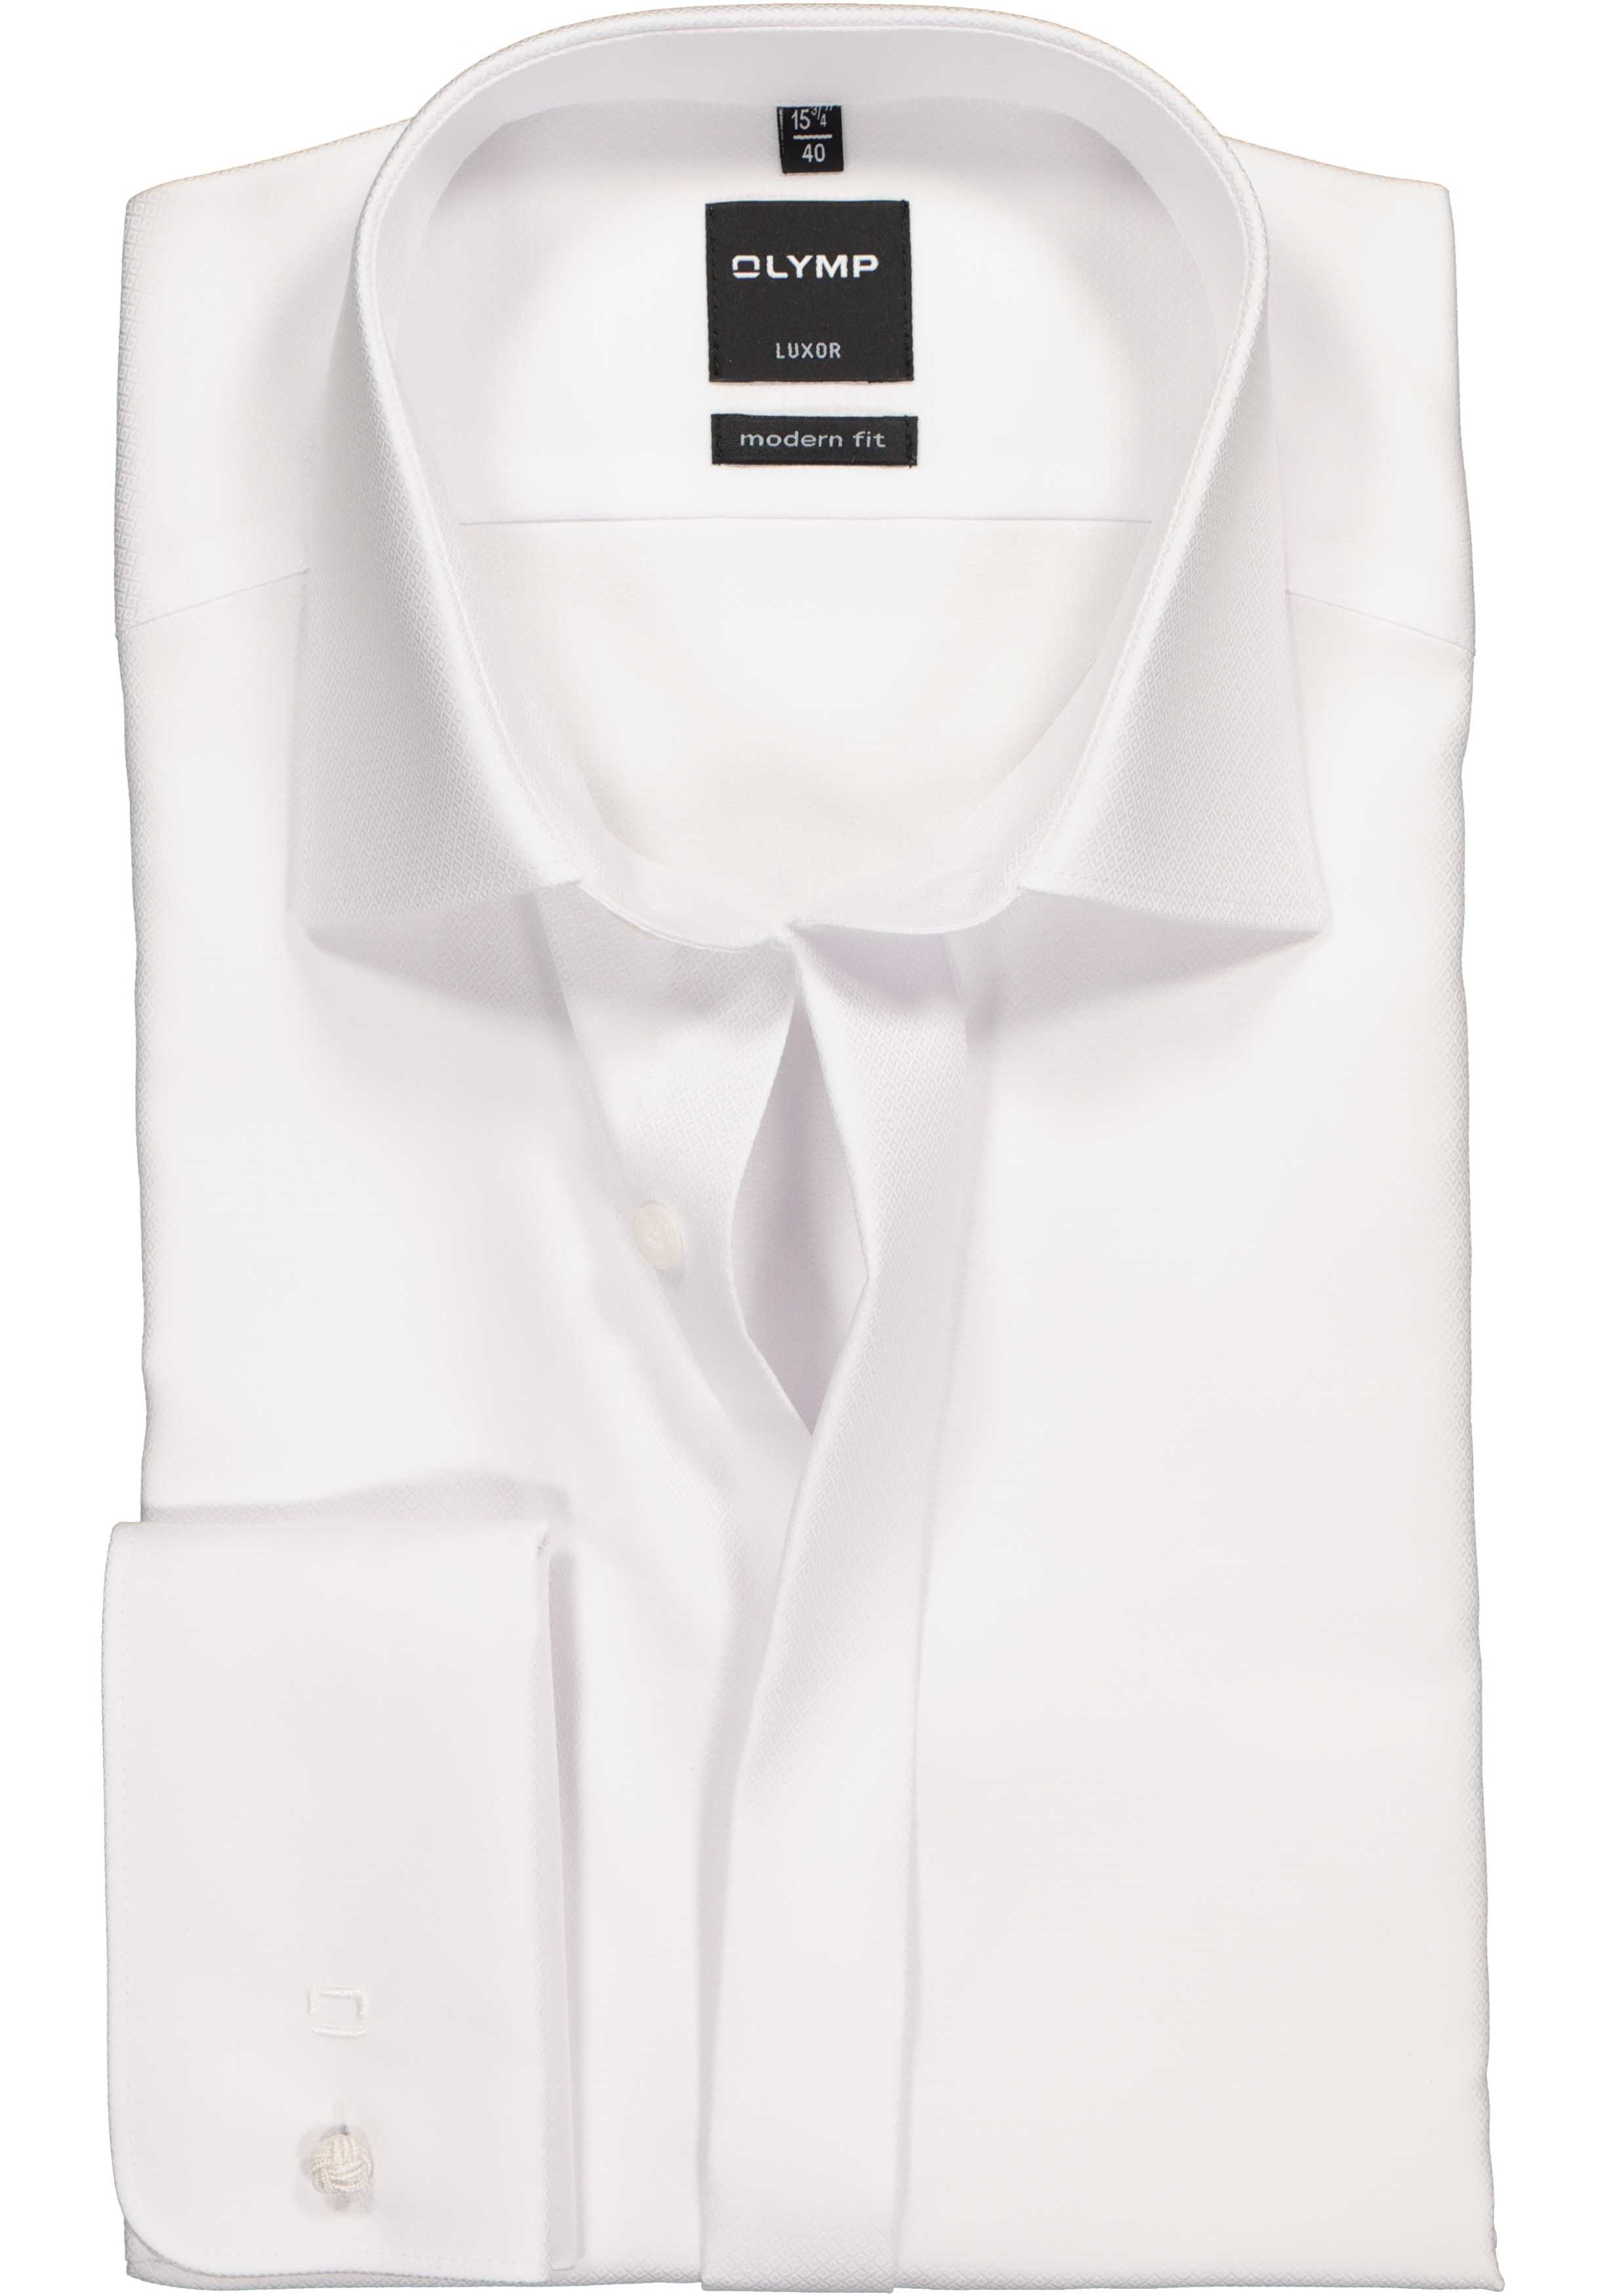 OLYMP Luxor modern fit overhemd, smoking overhemd, wit, structuur stof met Kent kraag